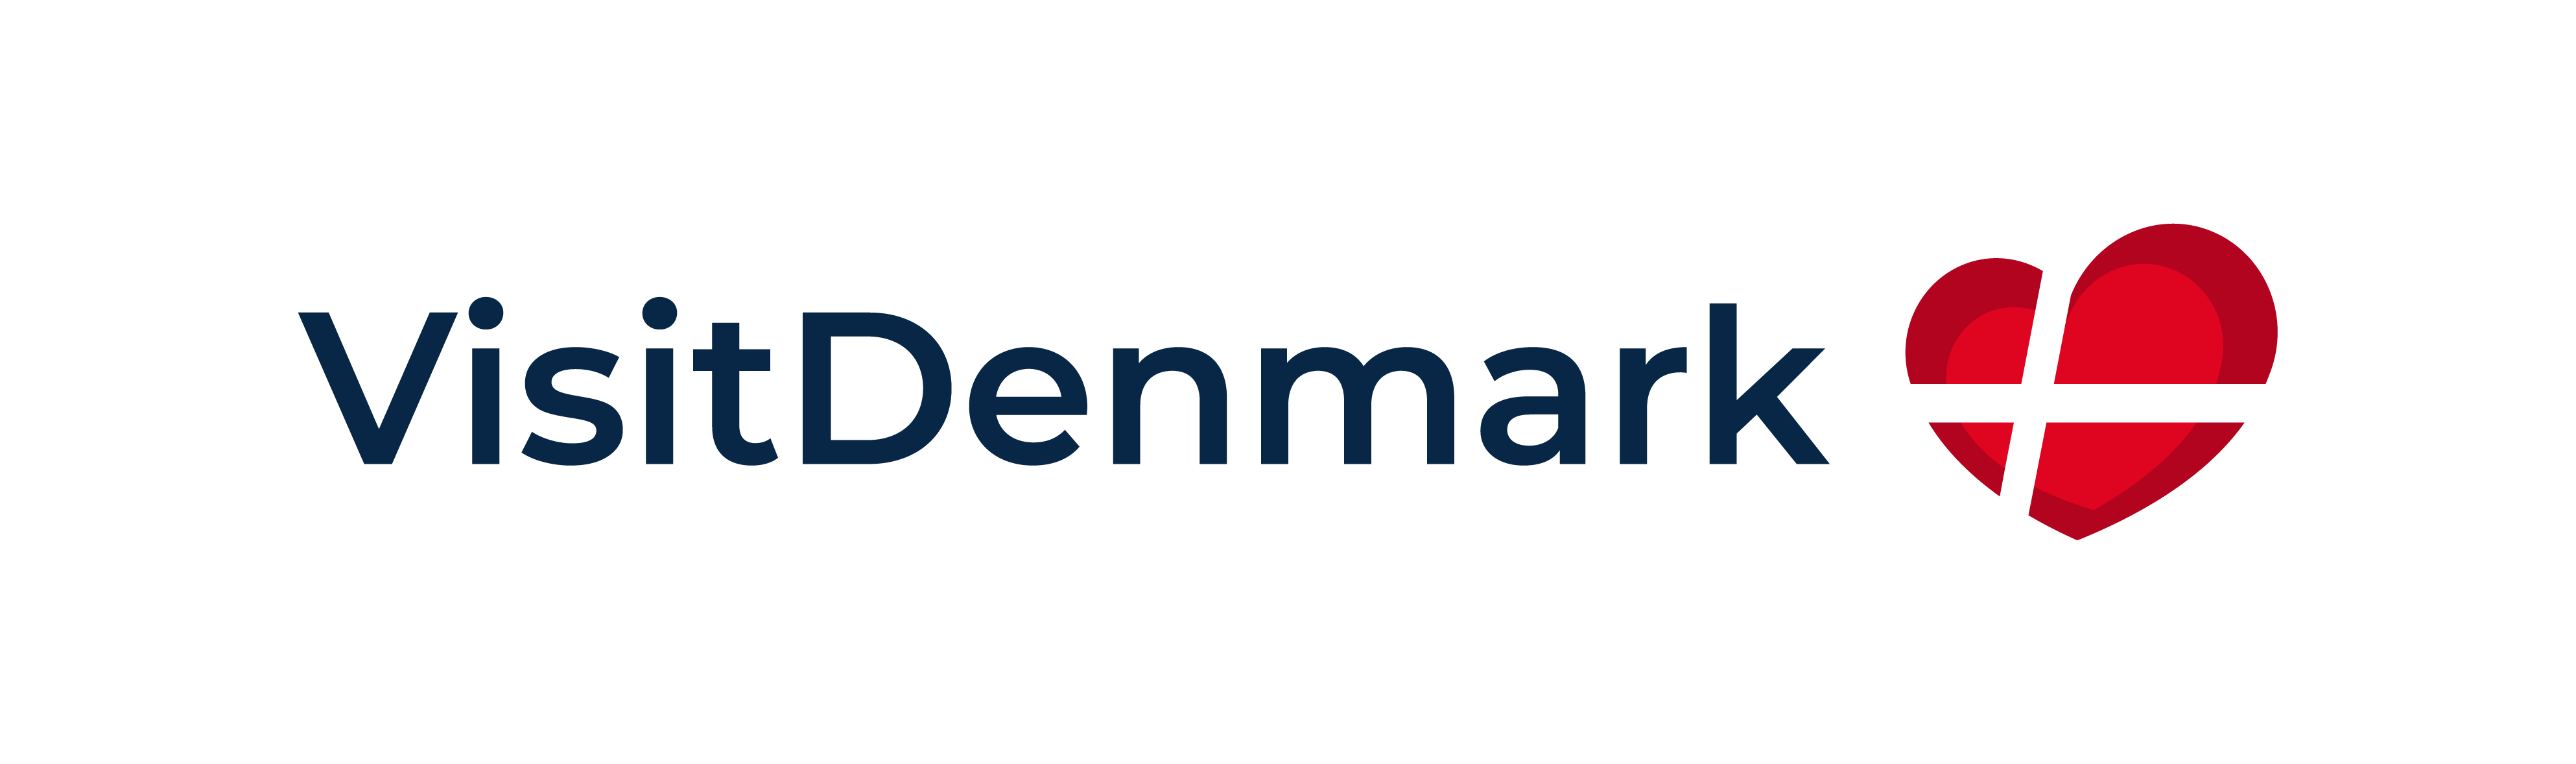 Visit Denmark Course